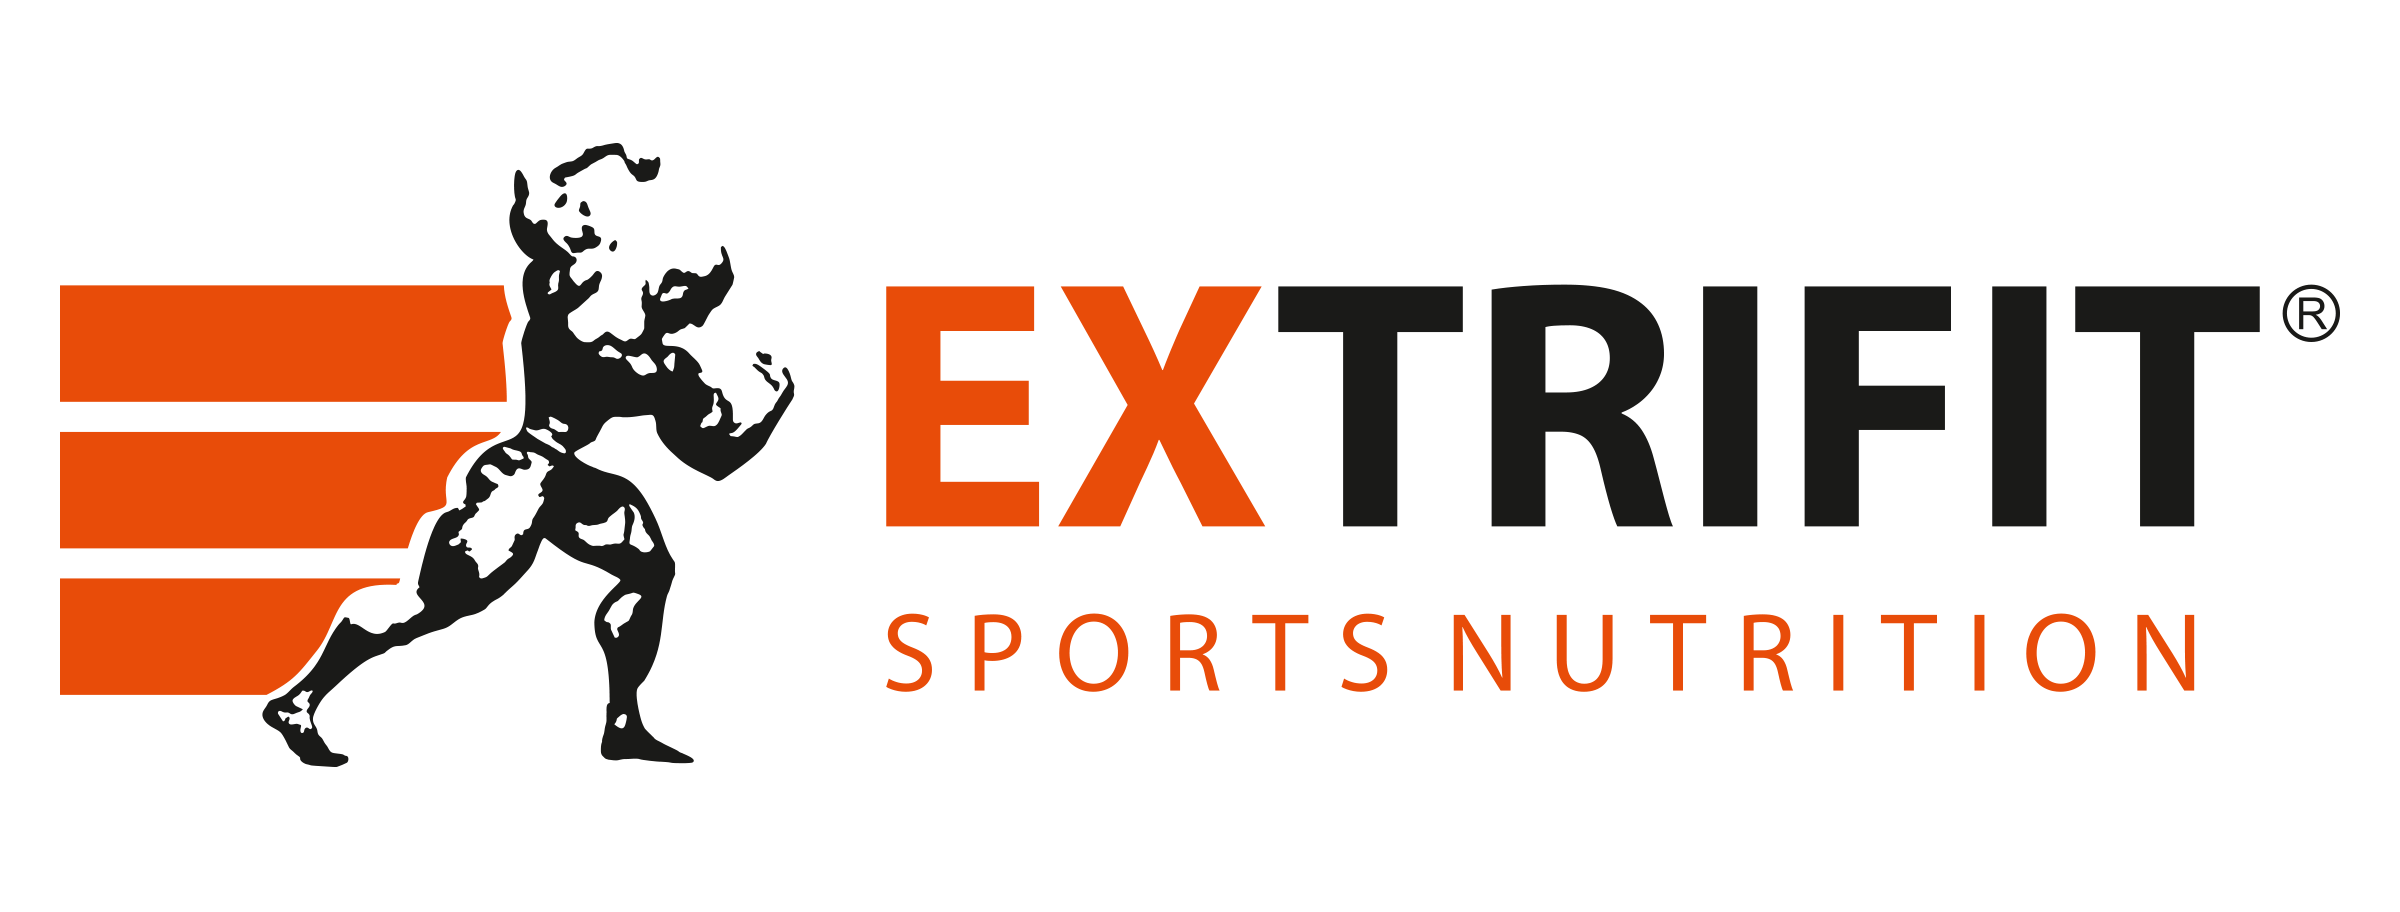 Extrifit Sports Nutrition